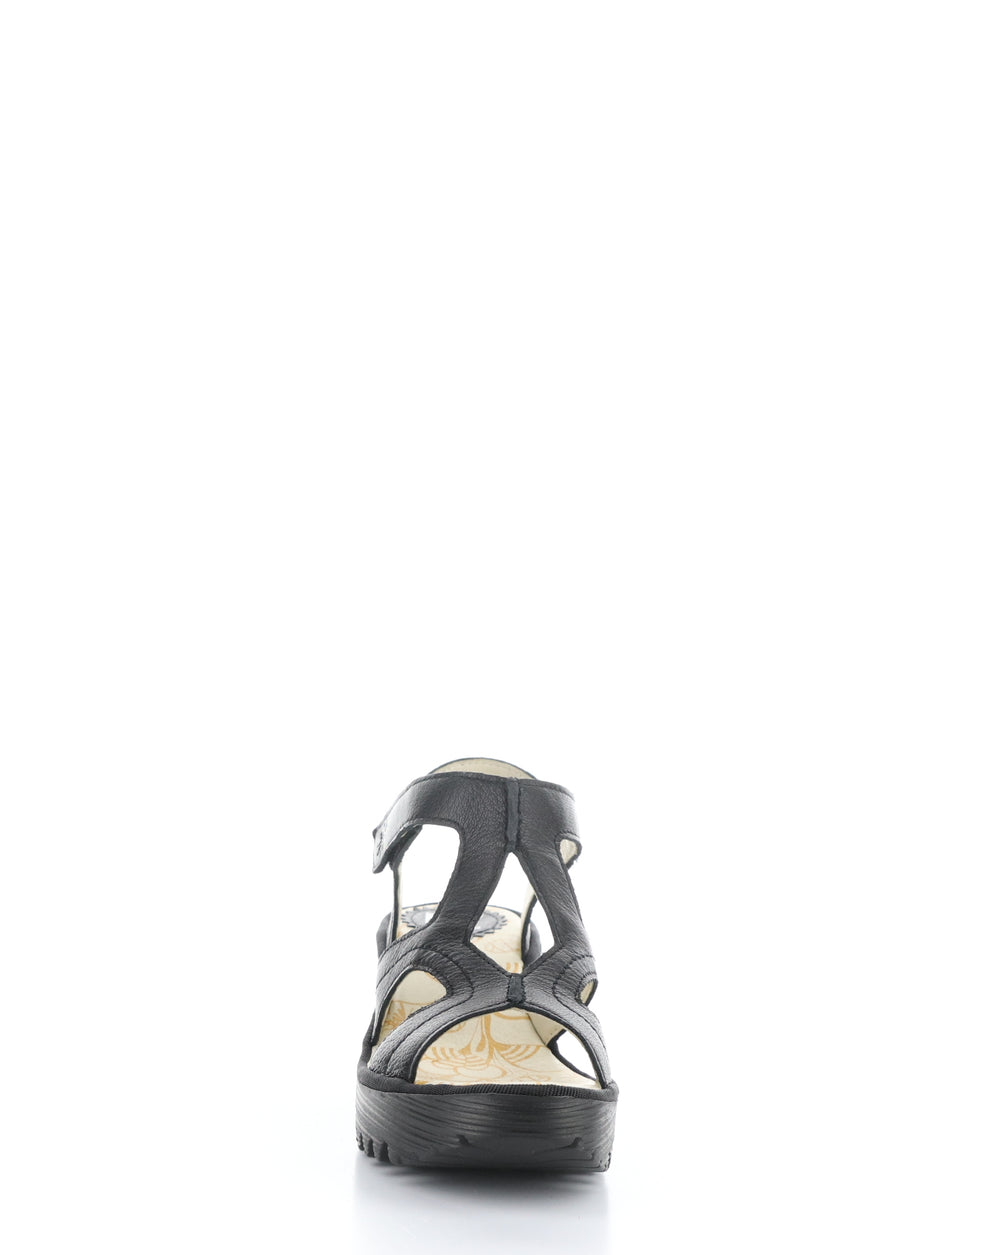 YOTU472FLY BLACK Velcro Sandals